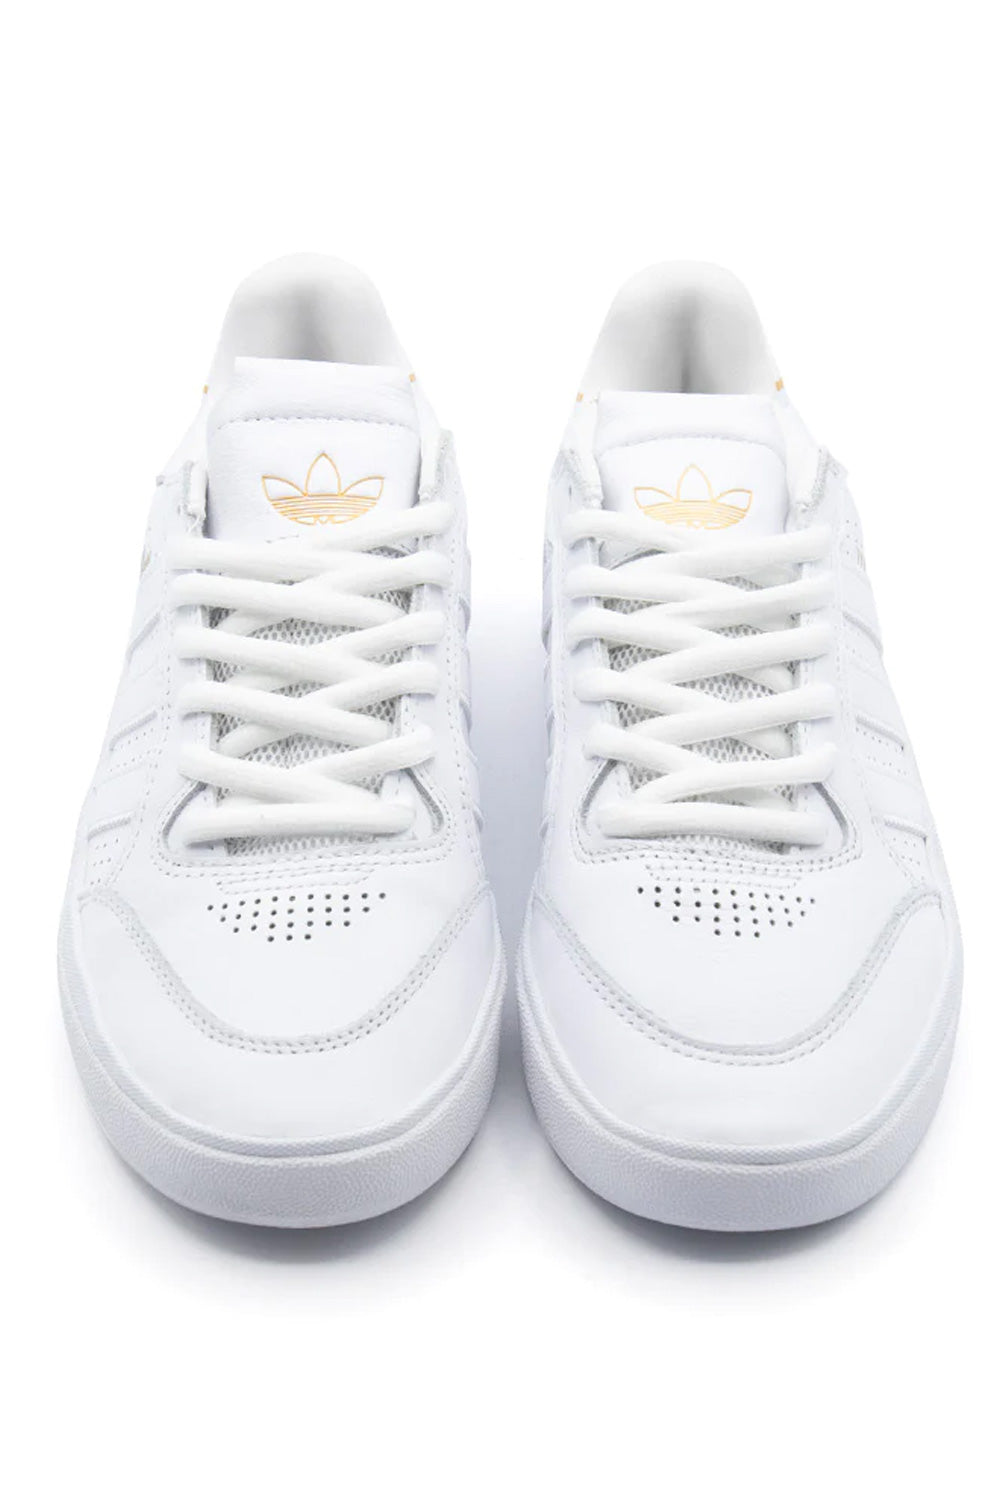 Adidas Tyshawn Low Shoe Cloud White / Cloud White / Gold Metallic - BONKERS